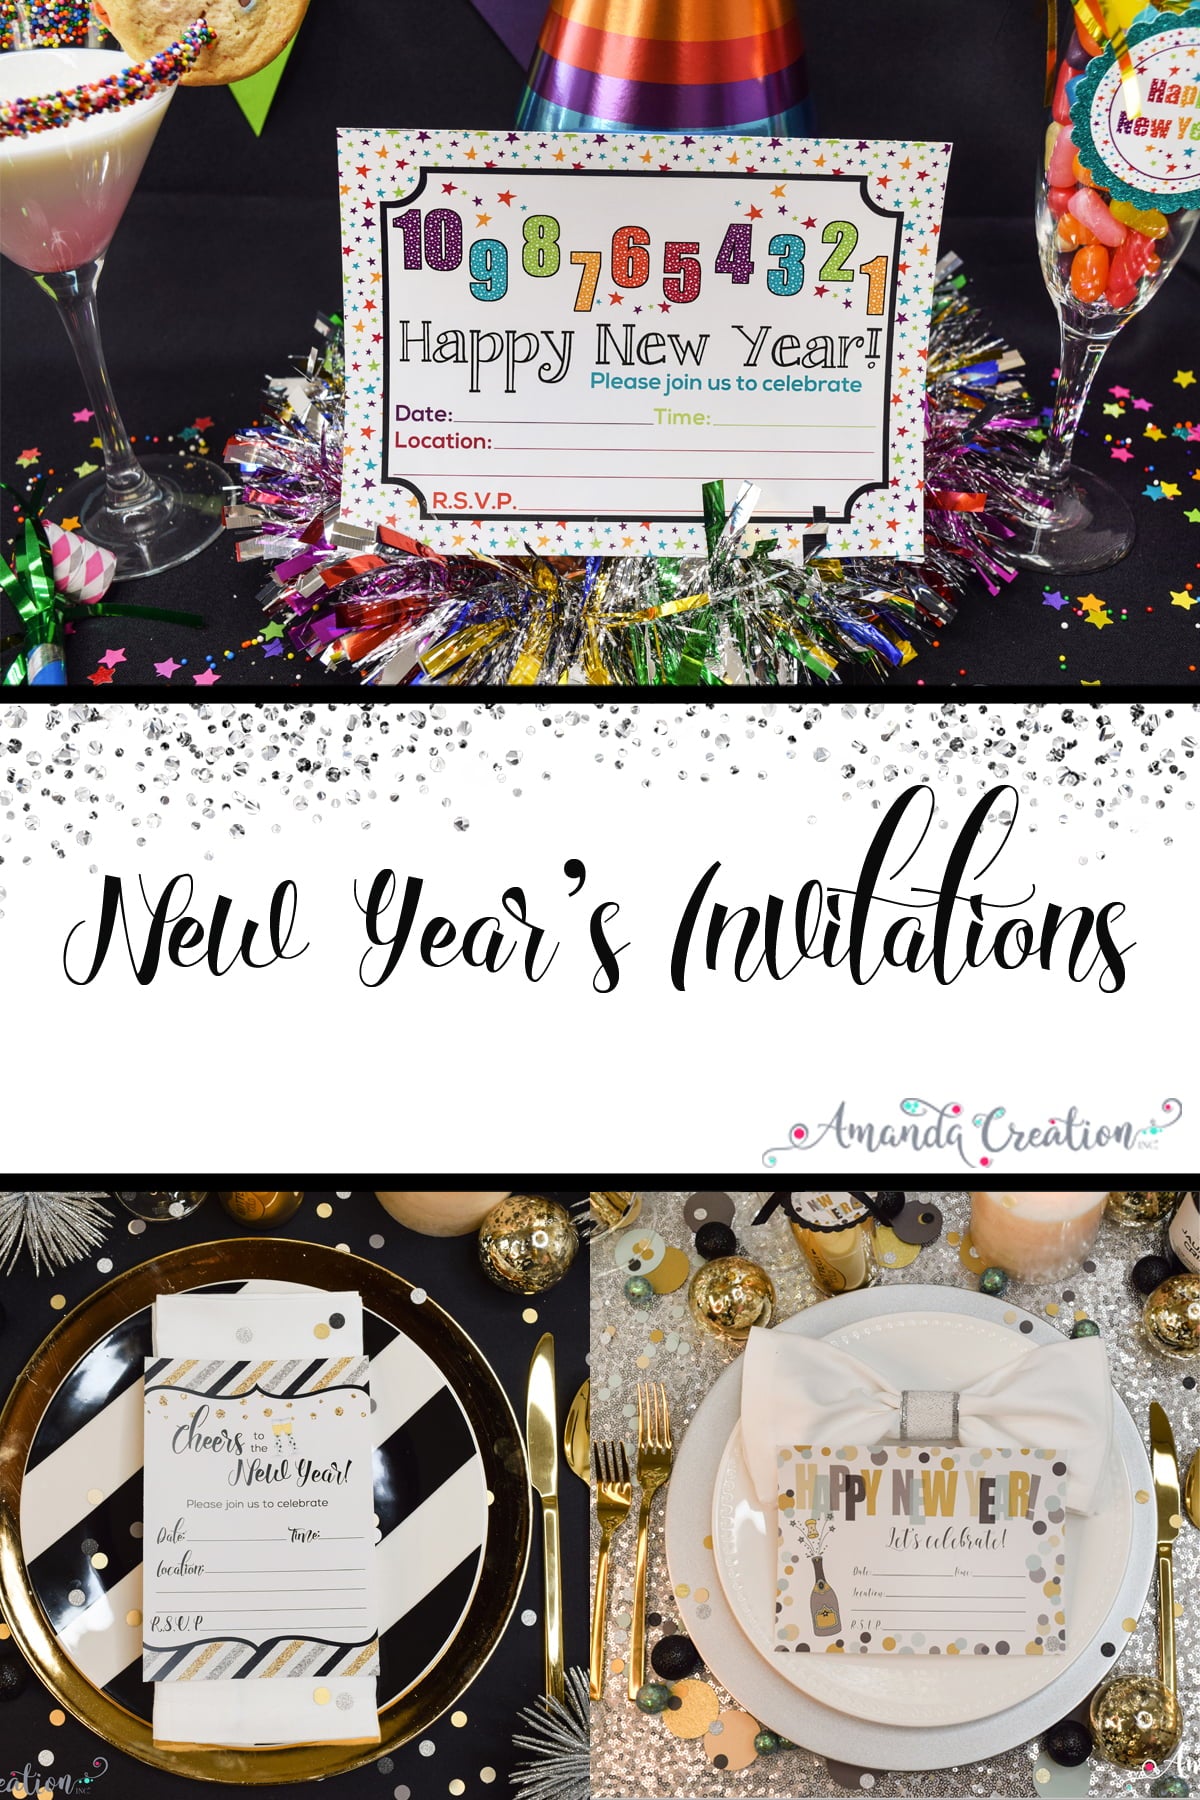 New Year's Invitations